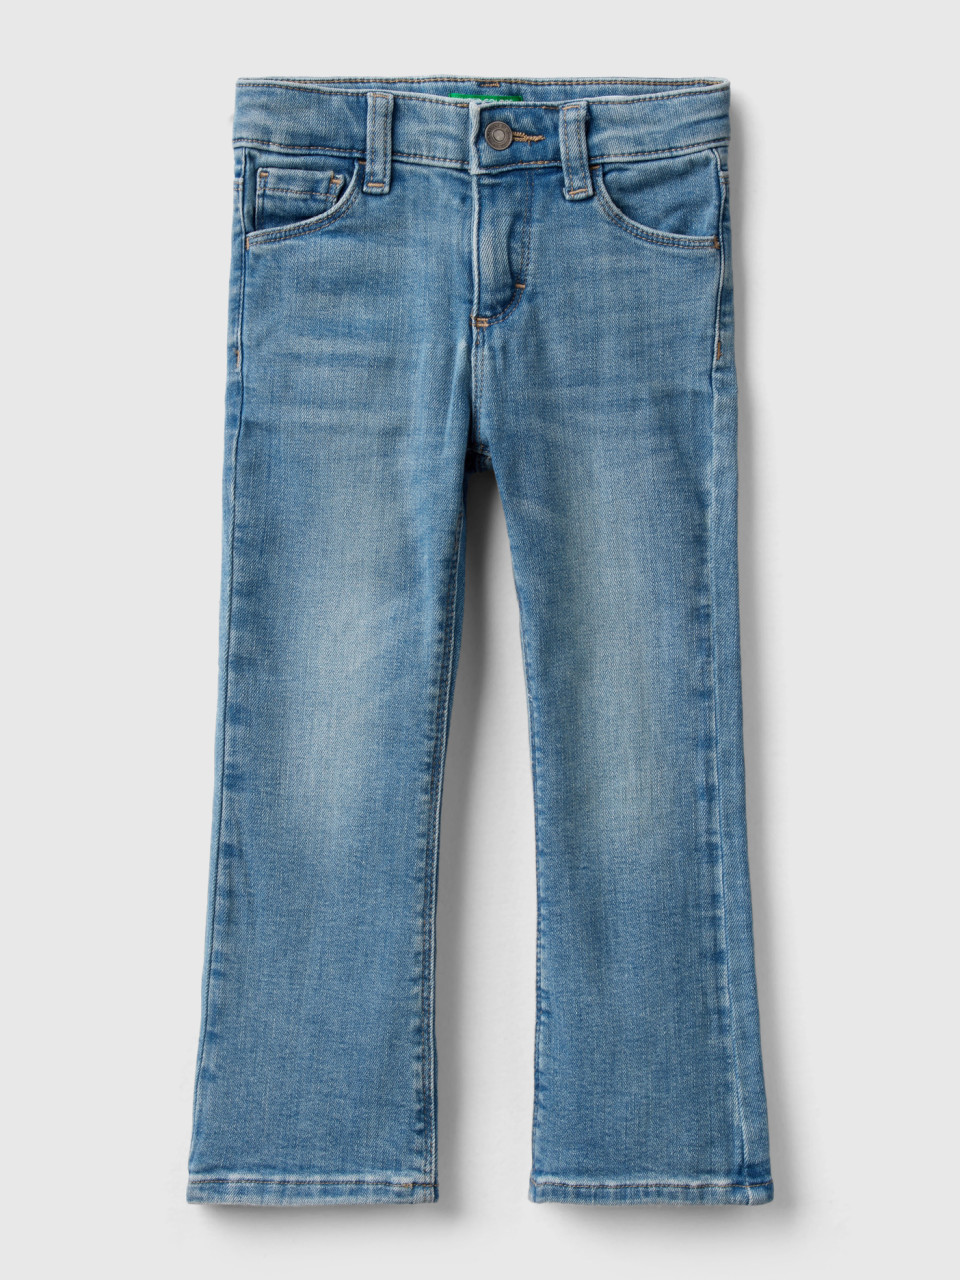 Benetton, Five Pocket Flared Jeans, Light Blue, Kids